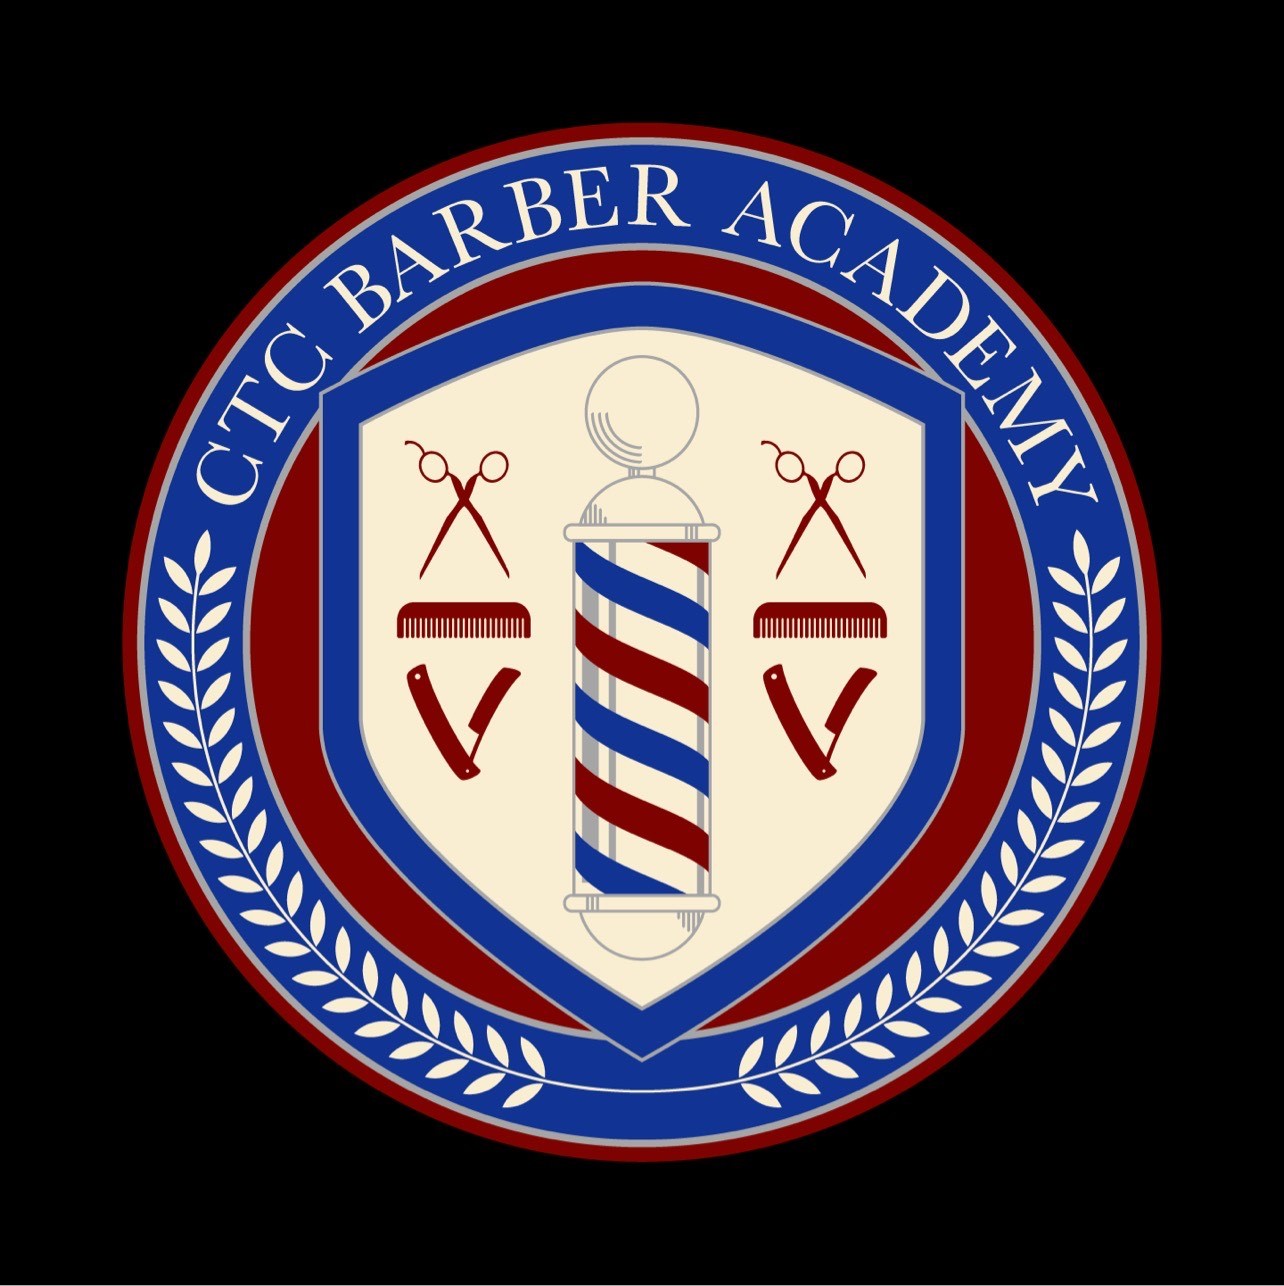 CTC Barber Academy